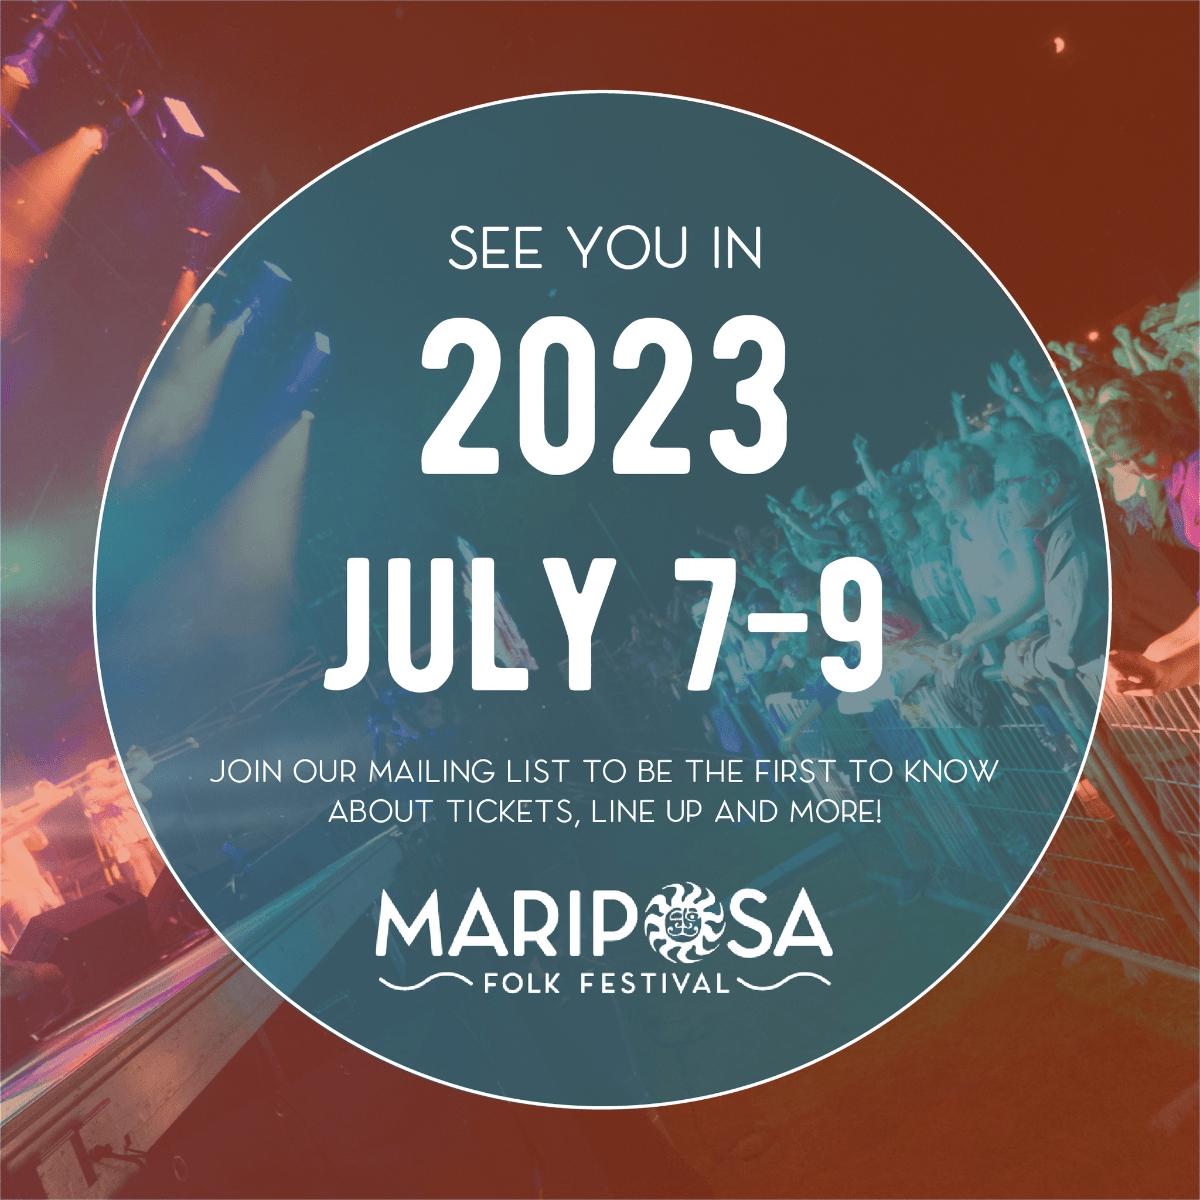 Mariposa Folk Festival Festival Lineup, Dates and Location